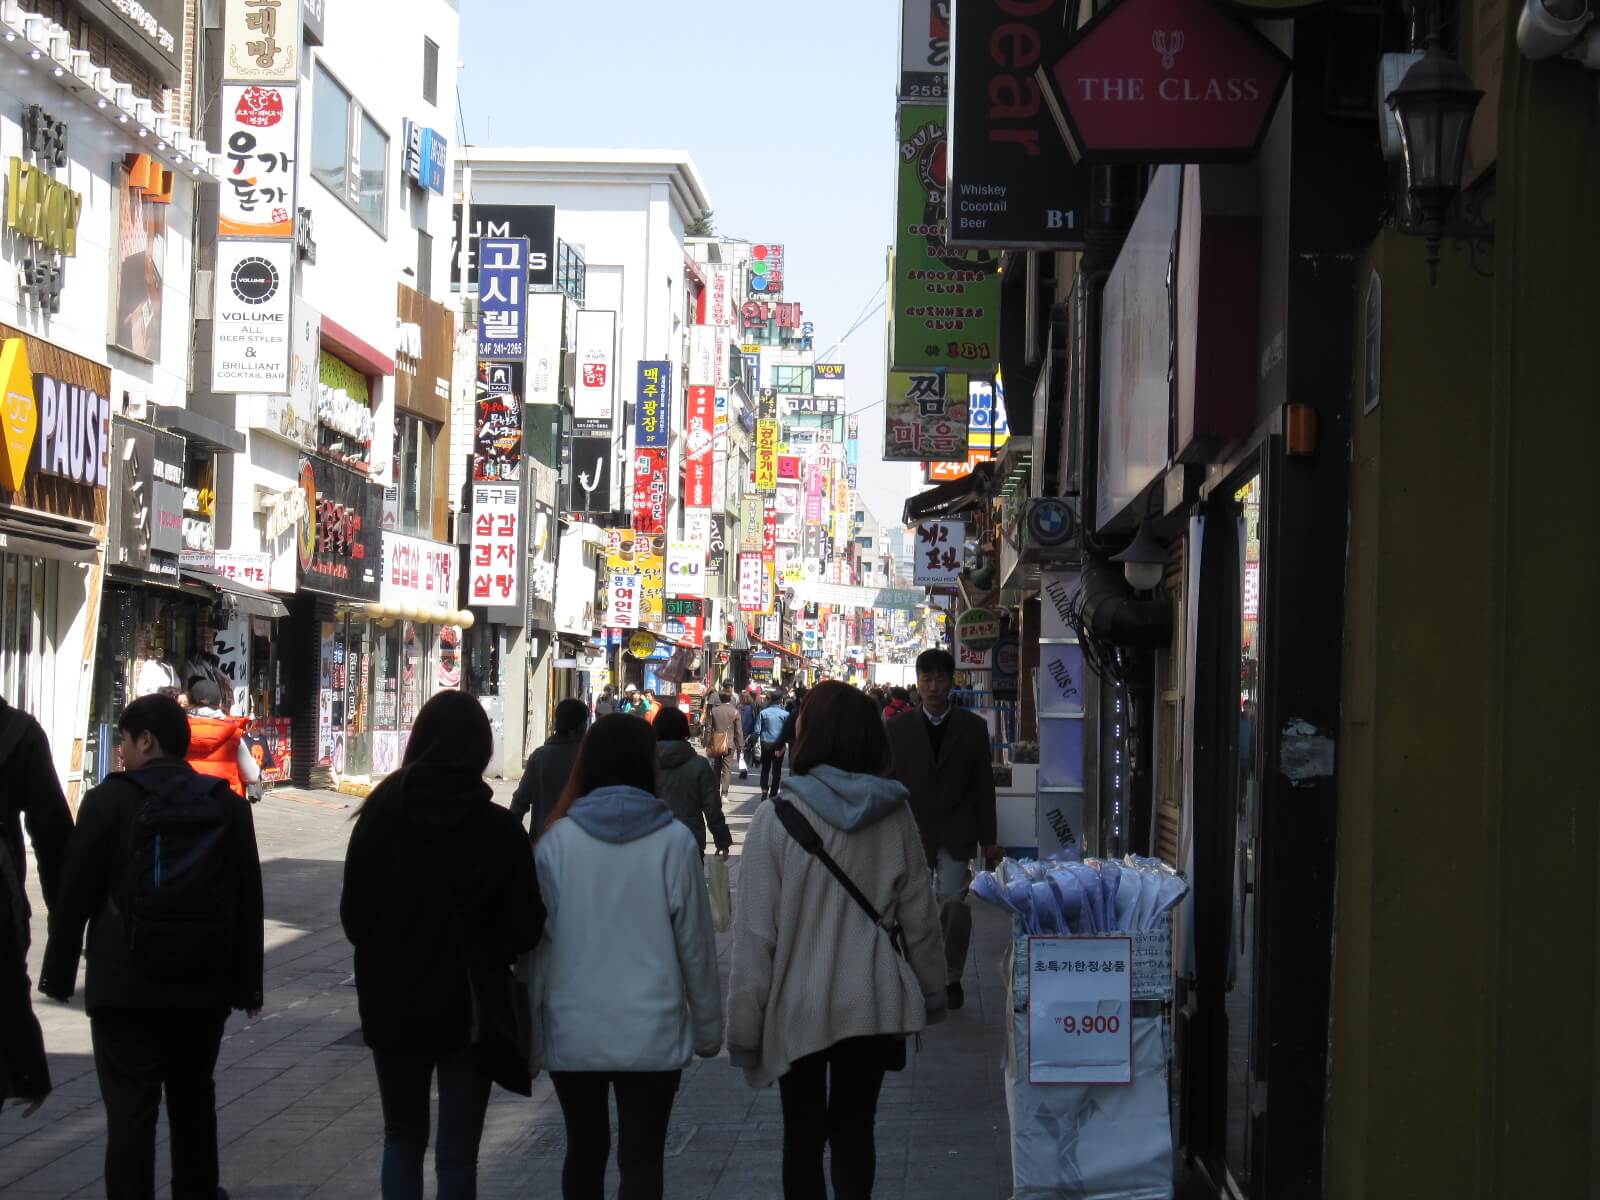 Busy street in Seoul, South Korea